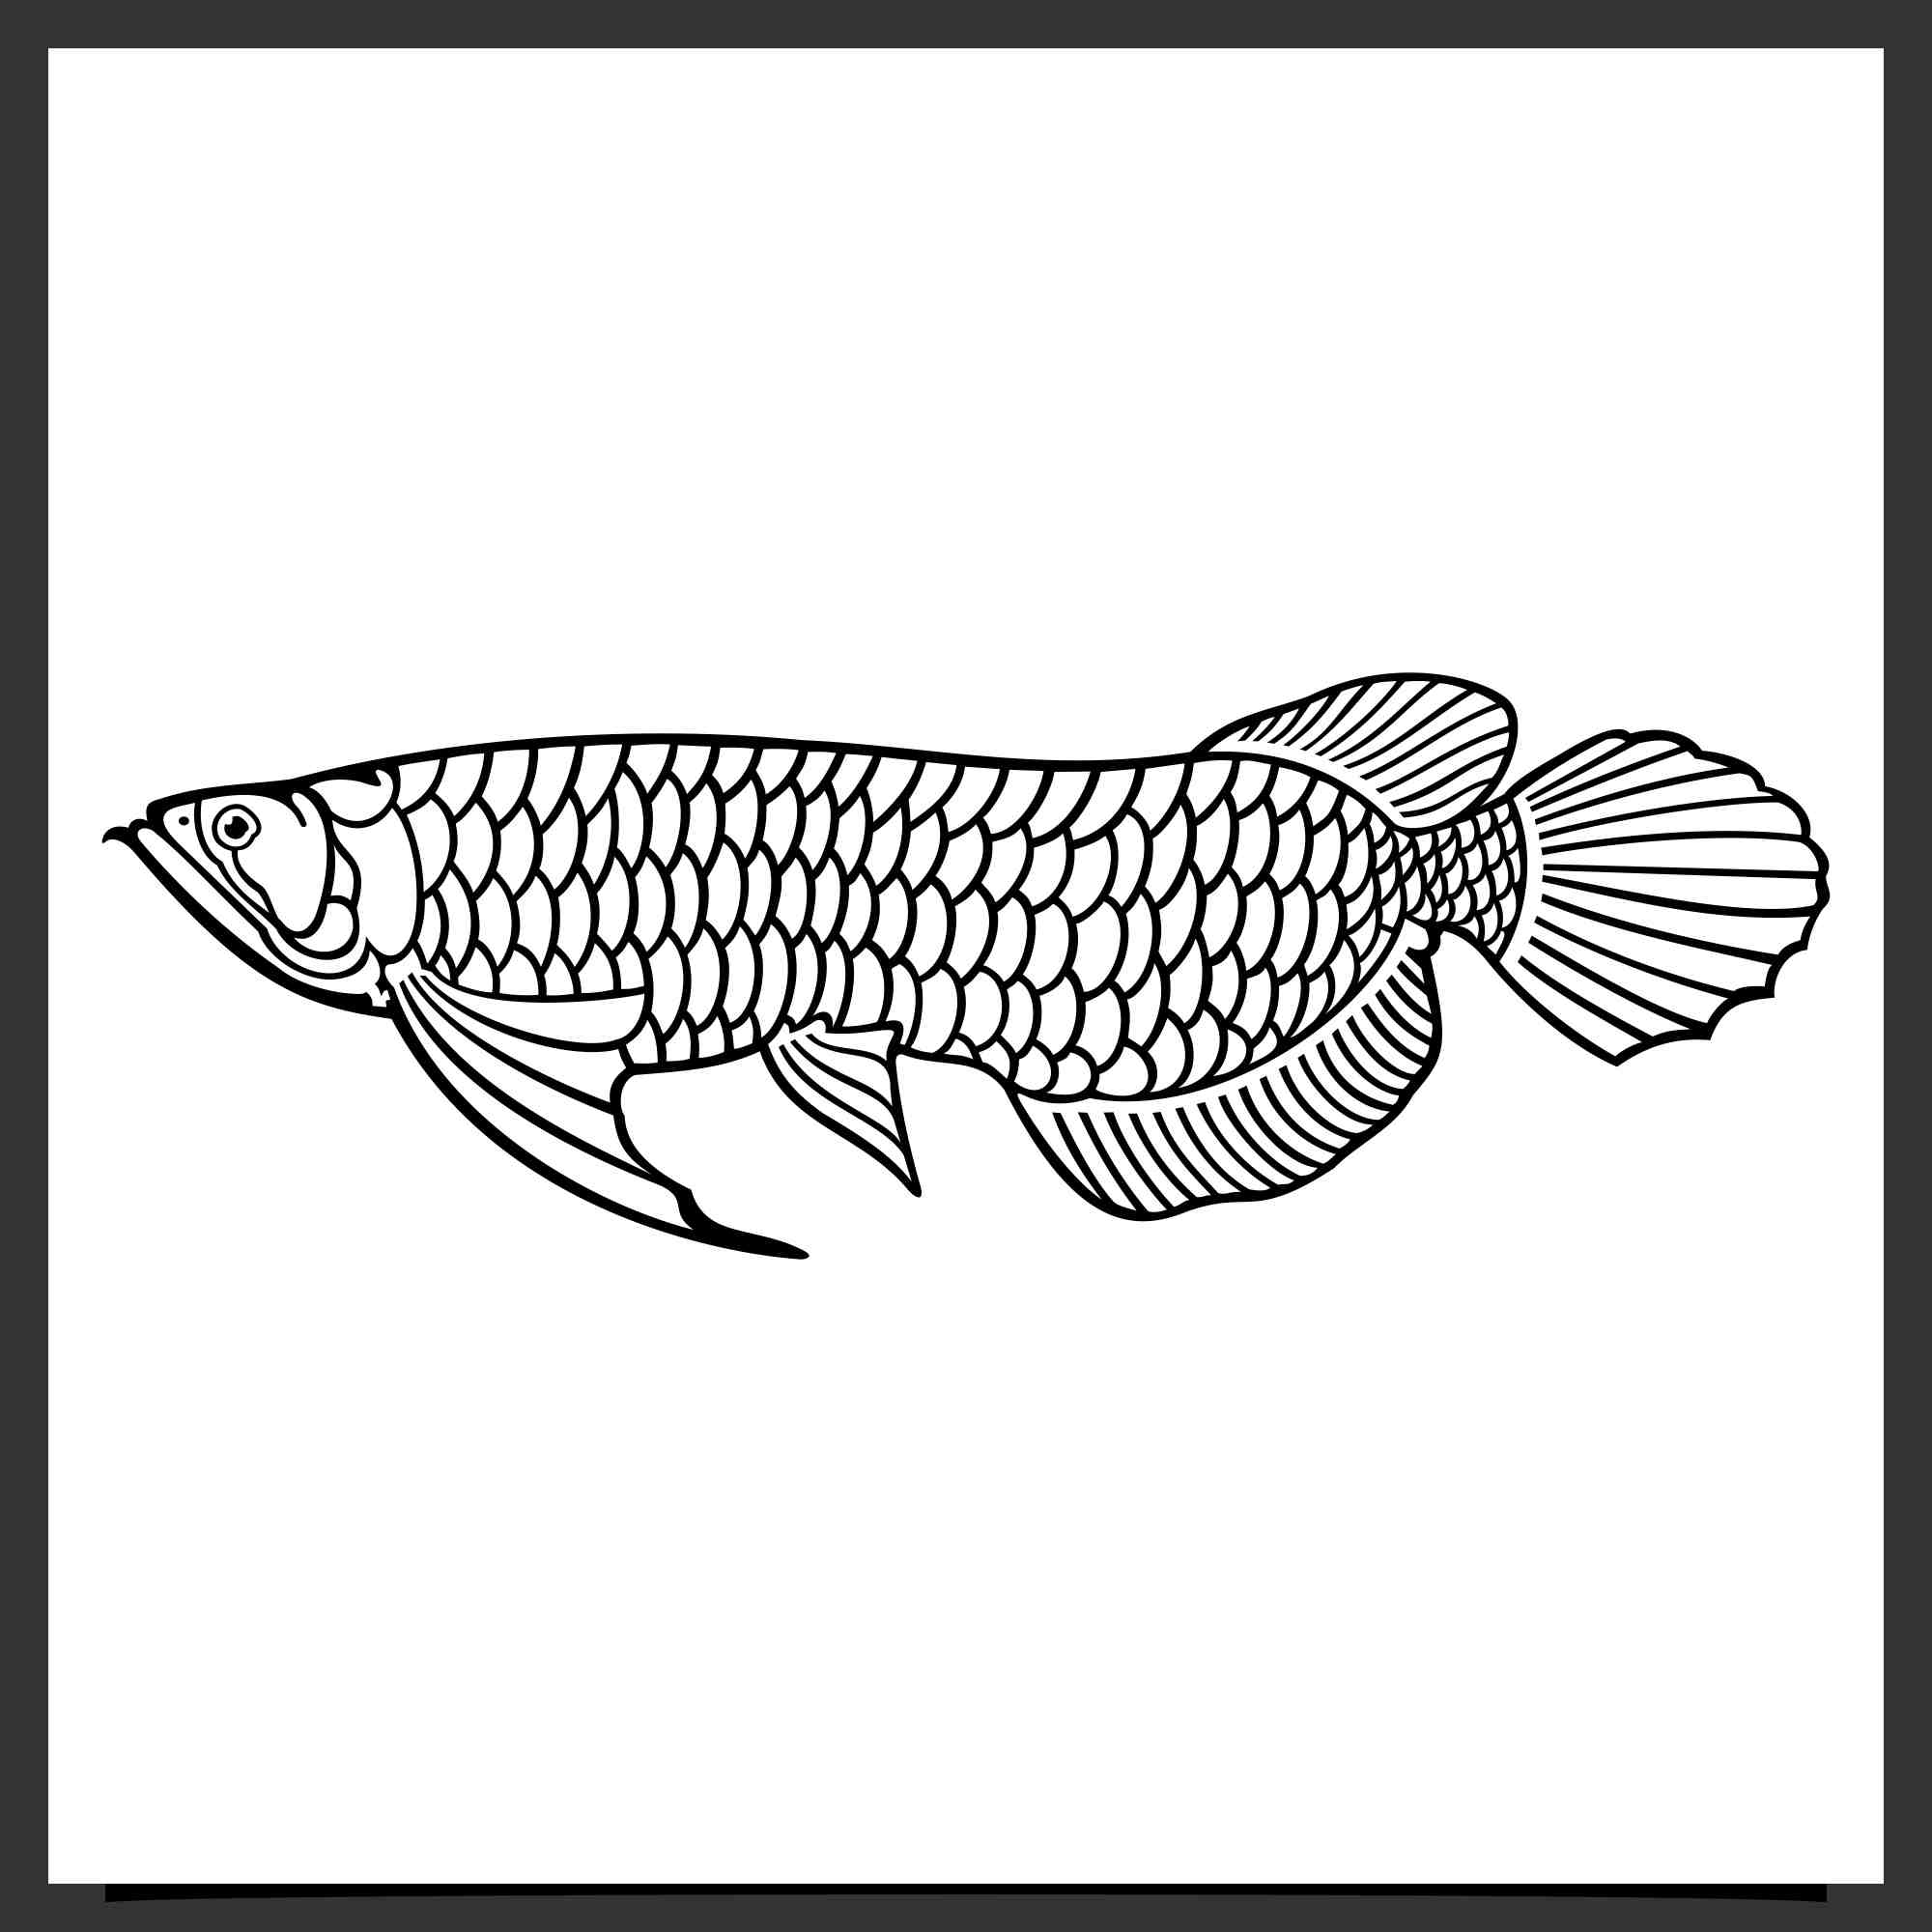 Set Arowana fish vector silhouette design - $4 preview image.